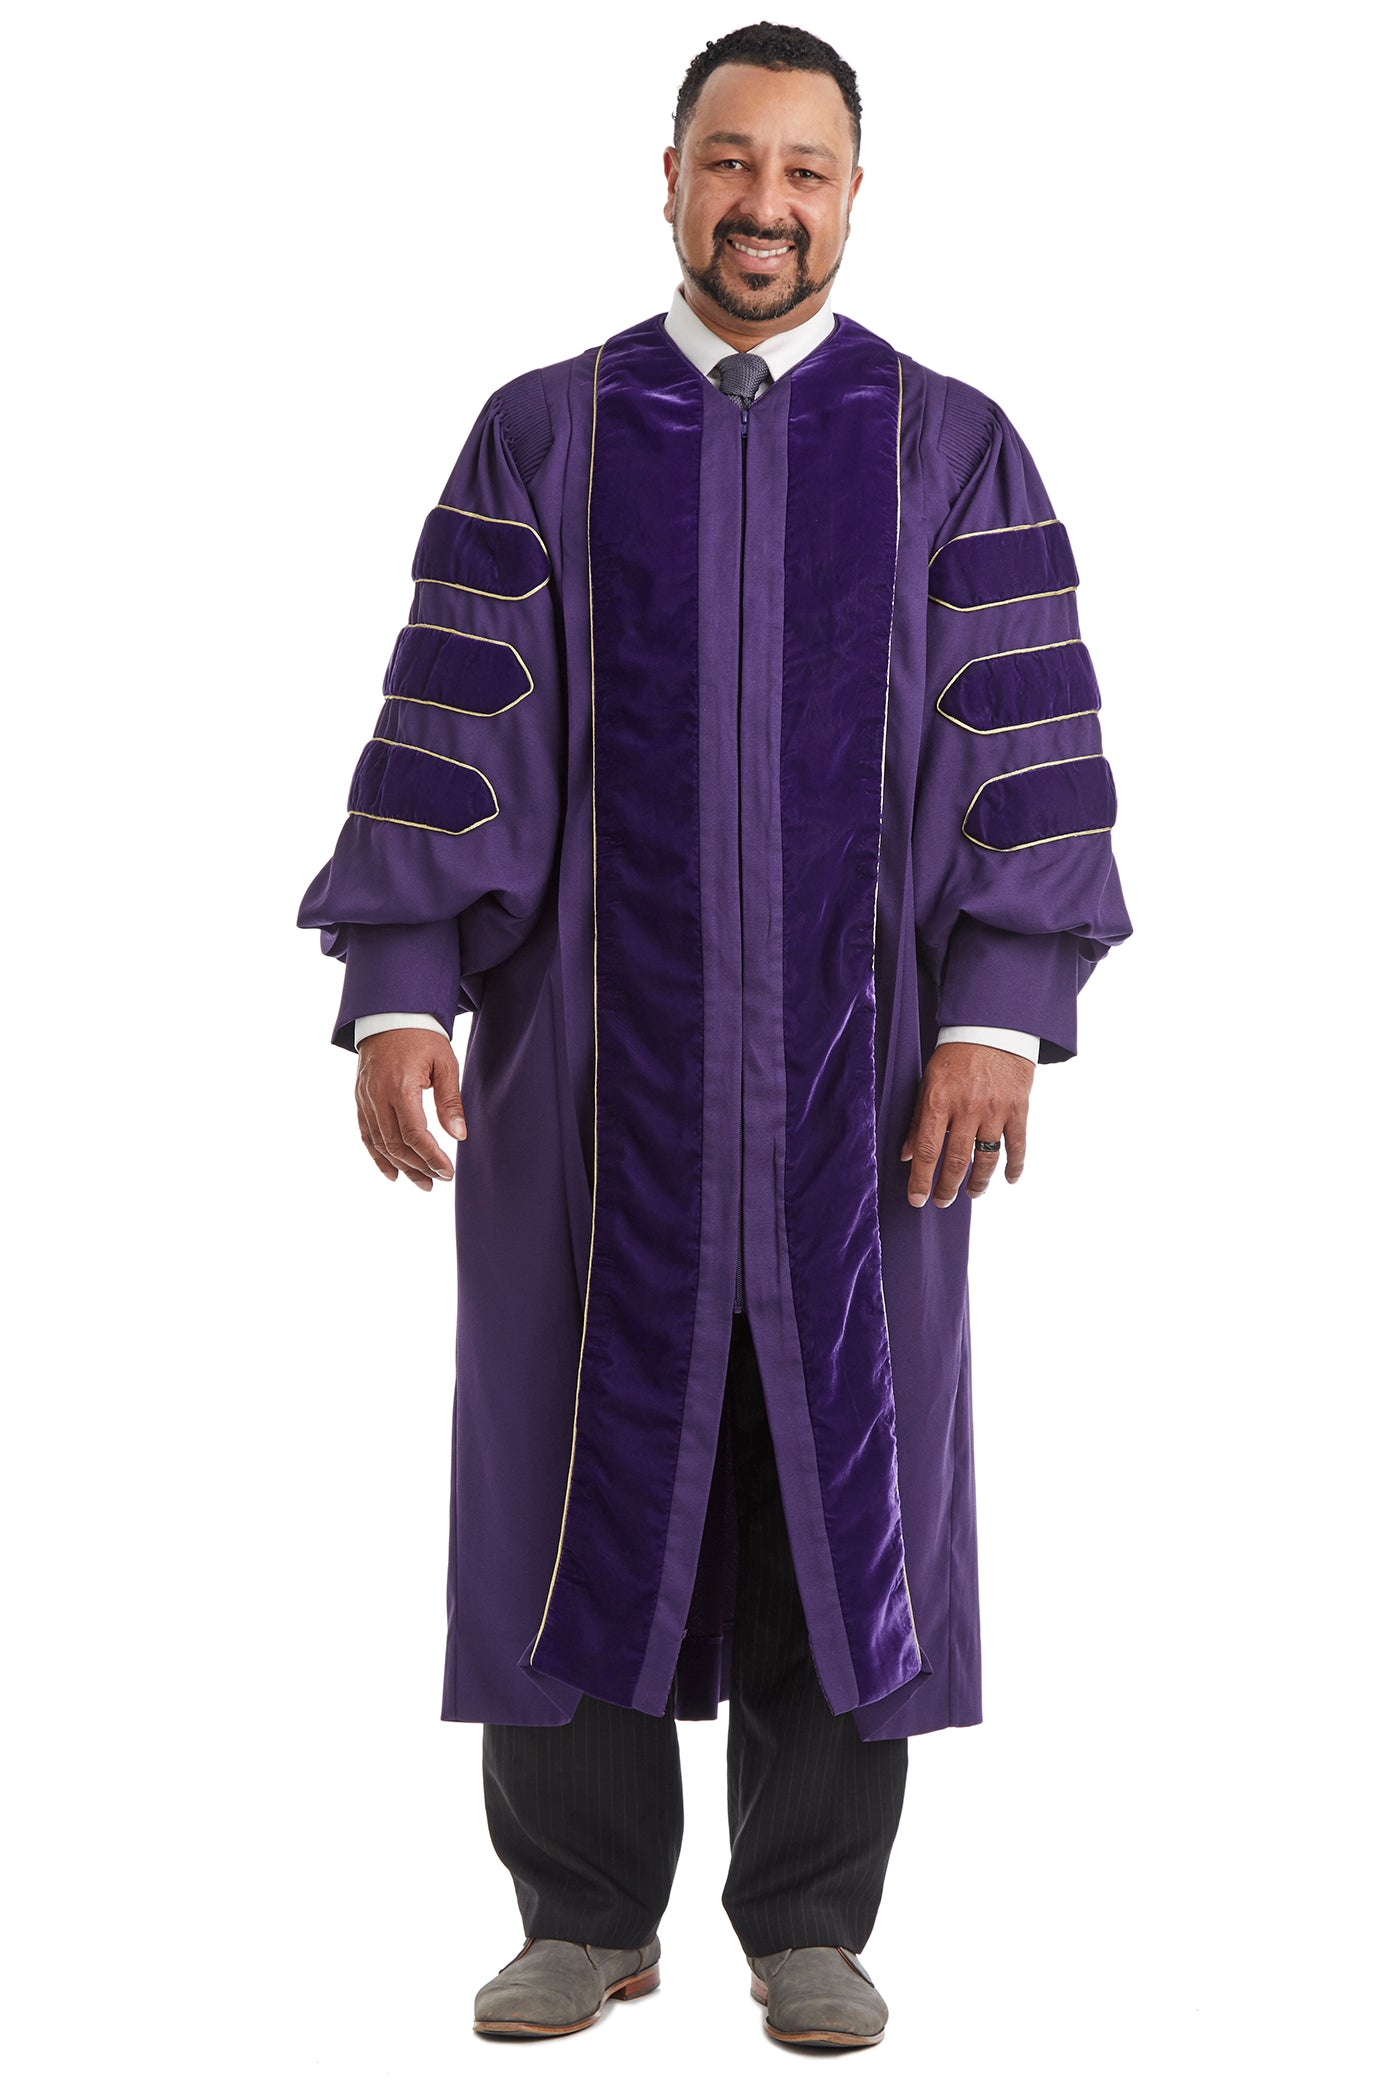 HD wallpaper: Man Wearing Graduation Gown, administration, adult, cap,  degree | Wallpaper Flare